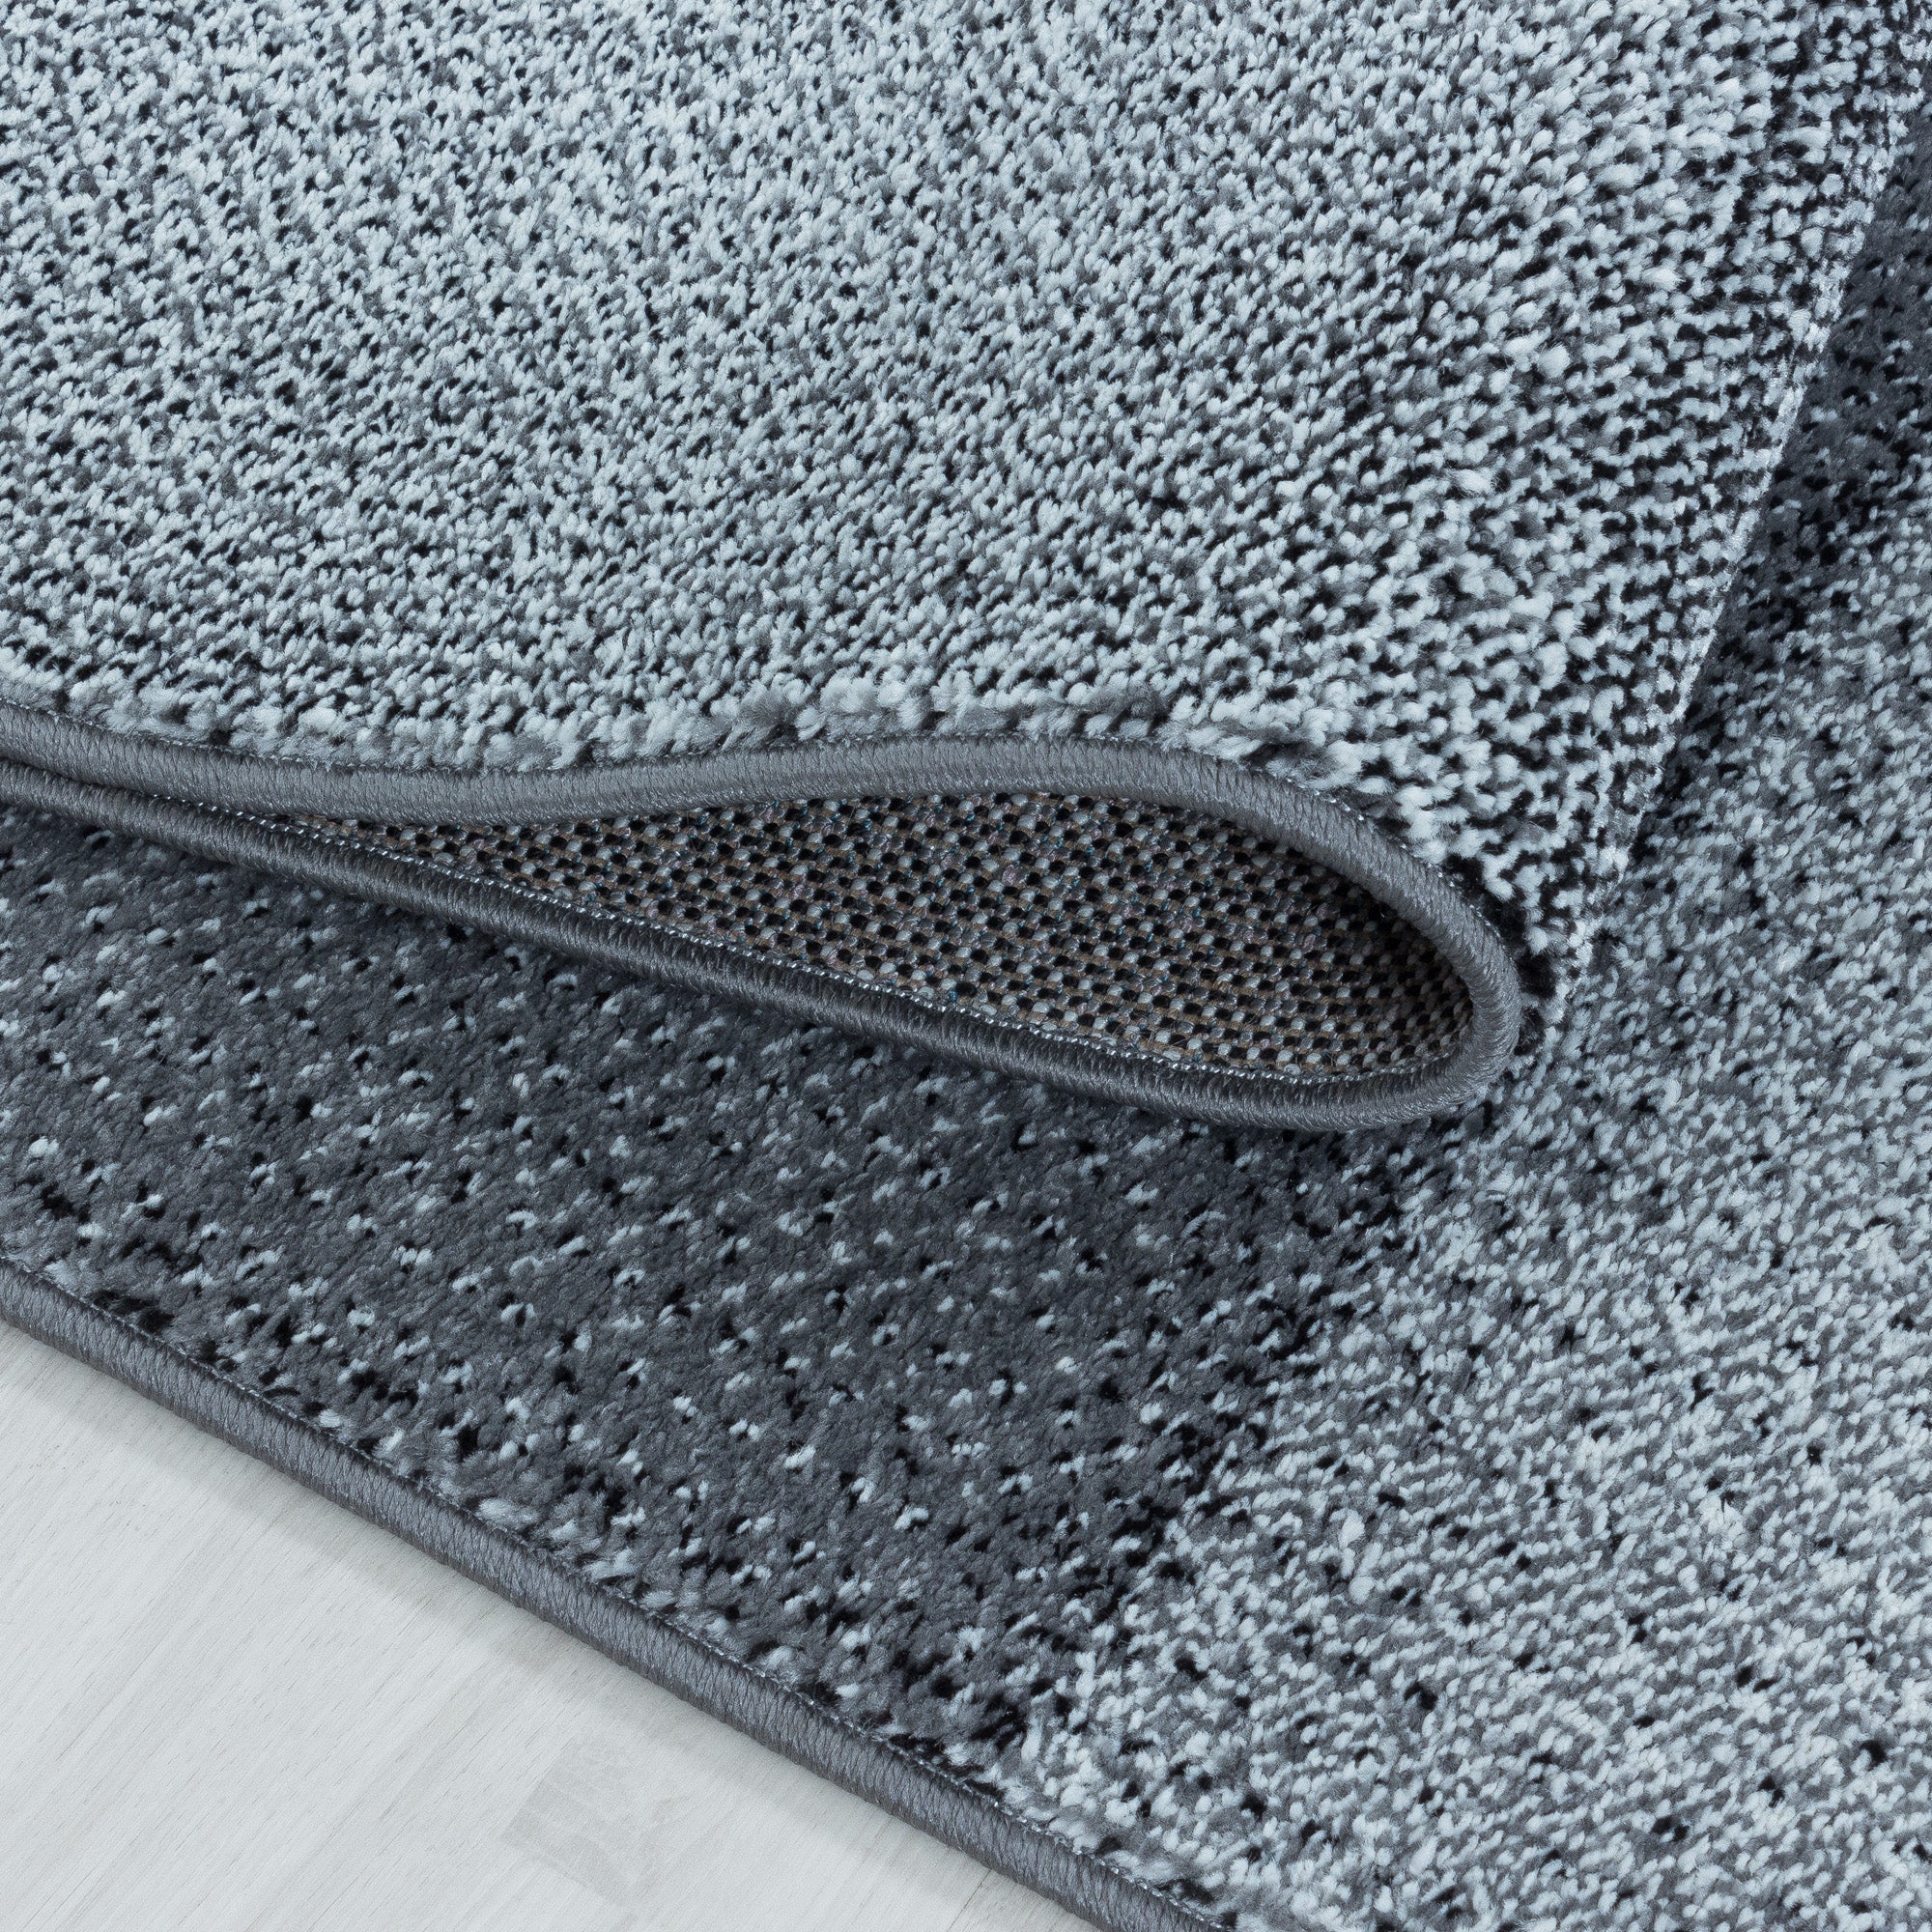 Kurzflor Teppich Bettset Grau Quadrat Pixel Muster Läuferset 3 Teile Weich